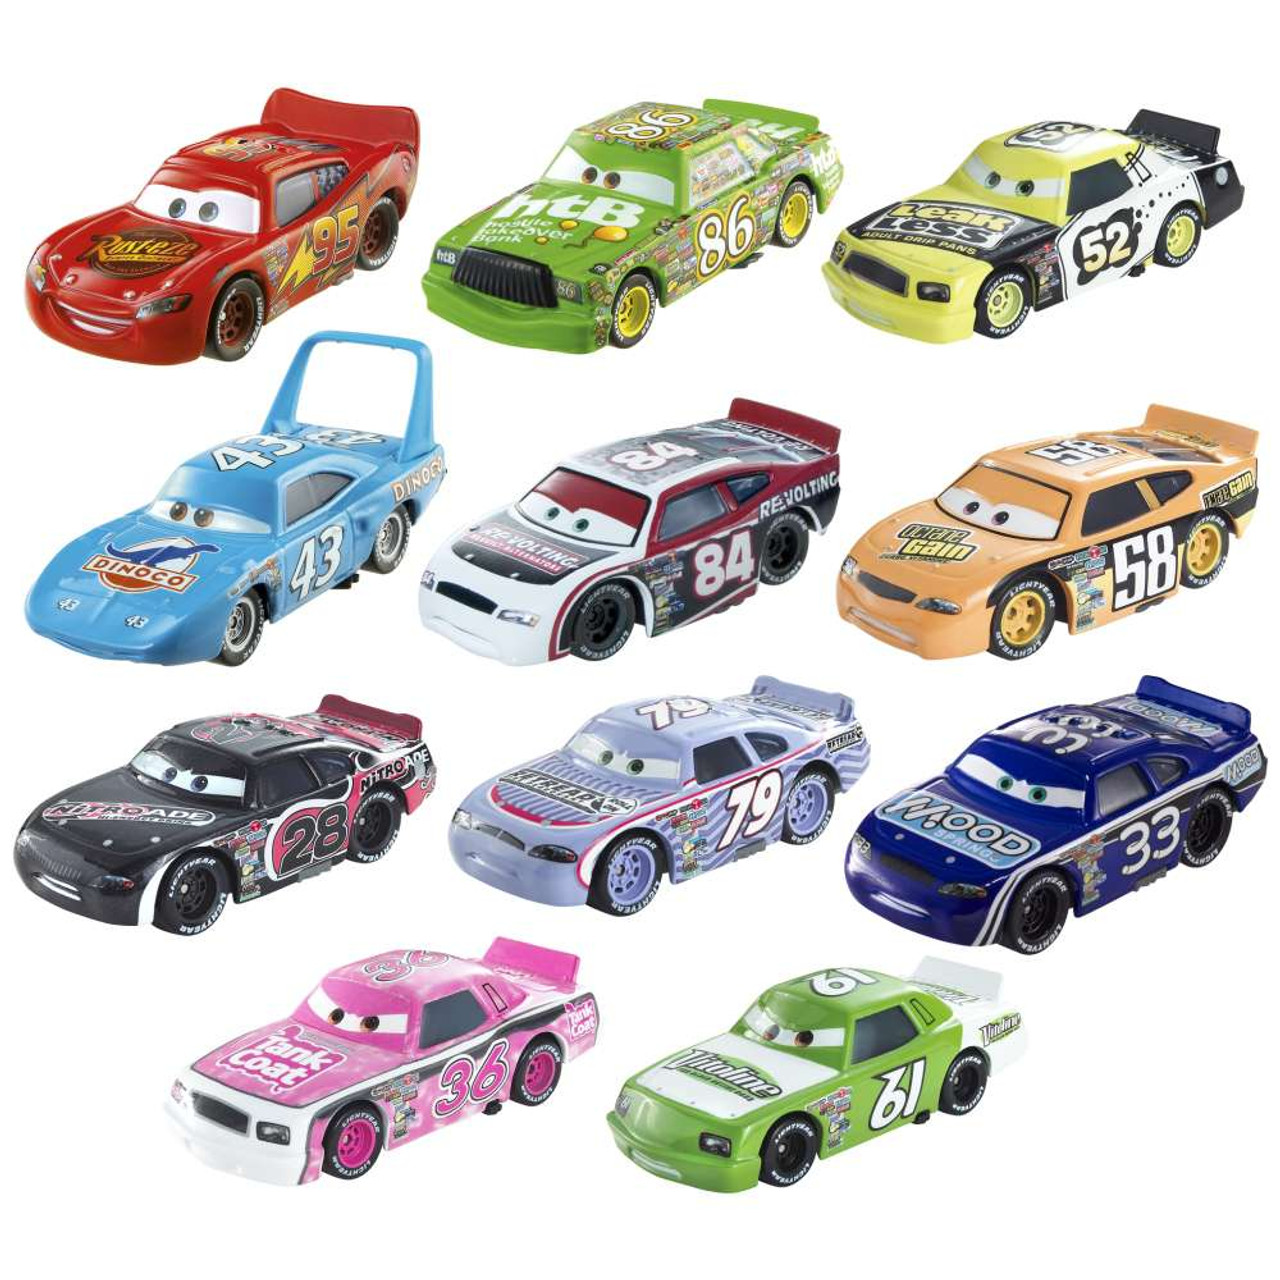 Cars 1 Piston Cup Racers Mattel